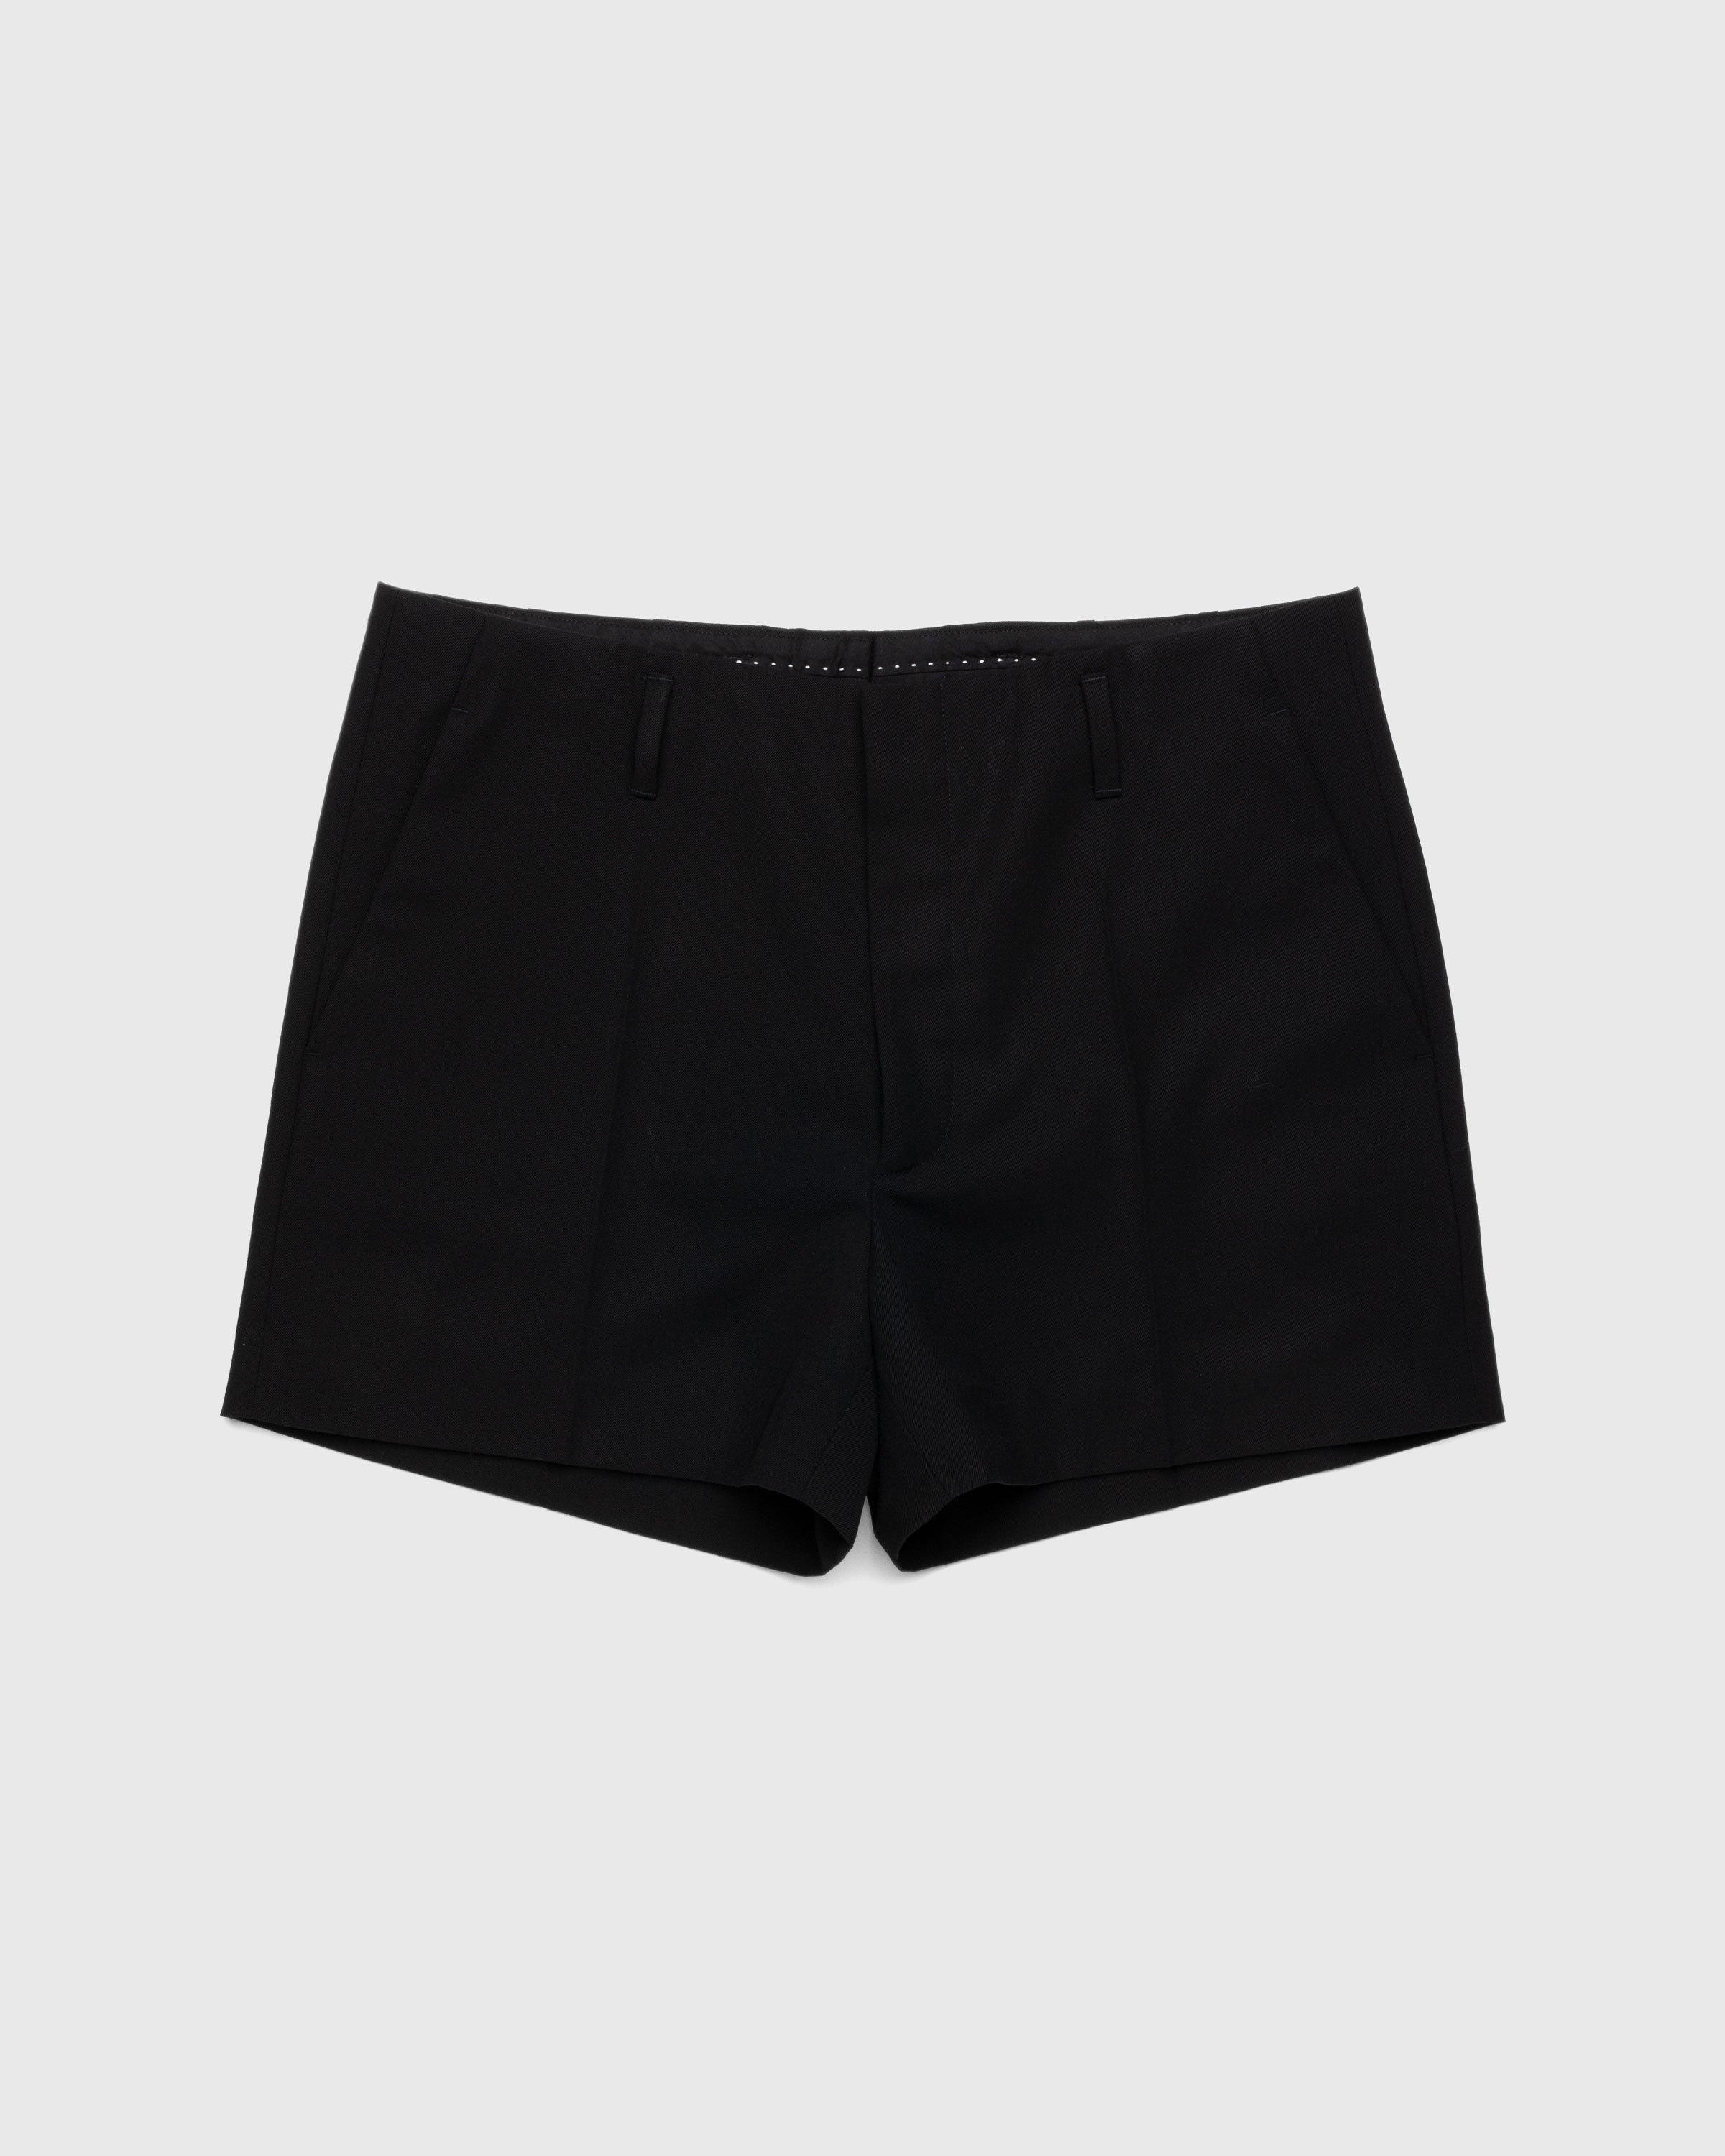 Dries van Noten - Paolo Short Pants Black - Clothing - Black - Image 1